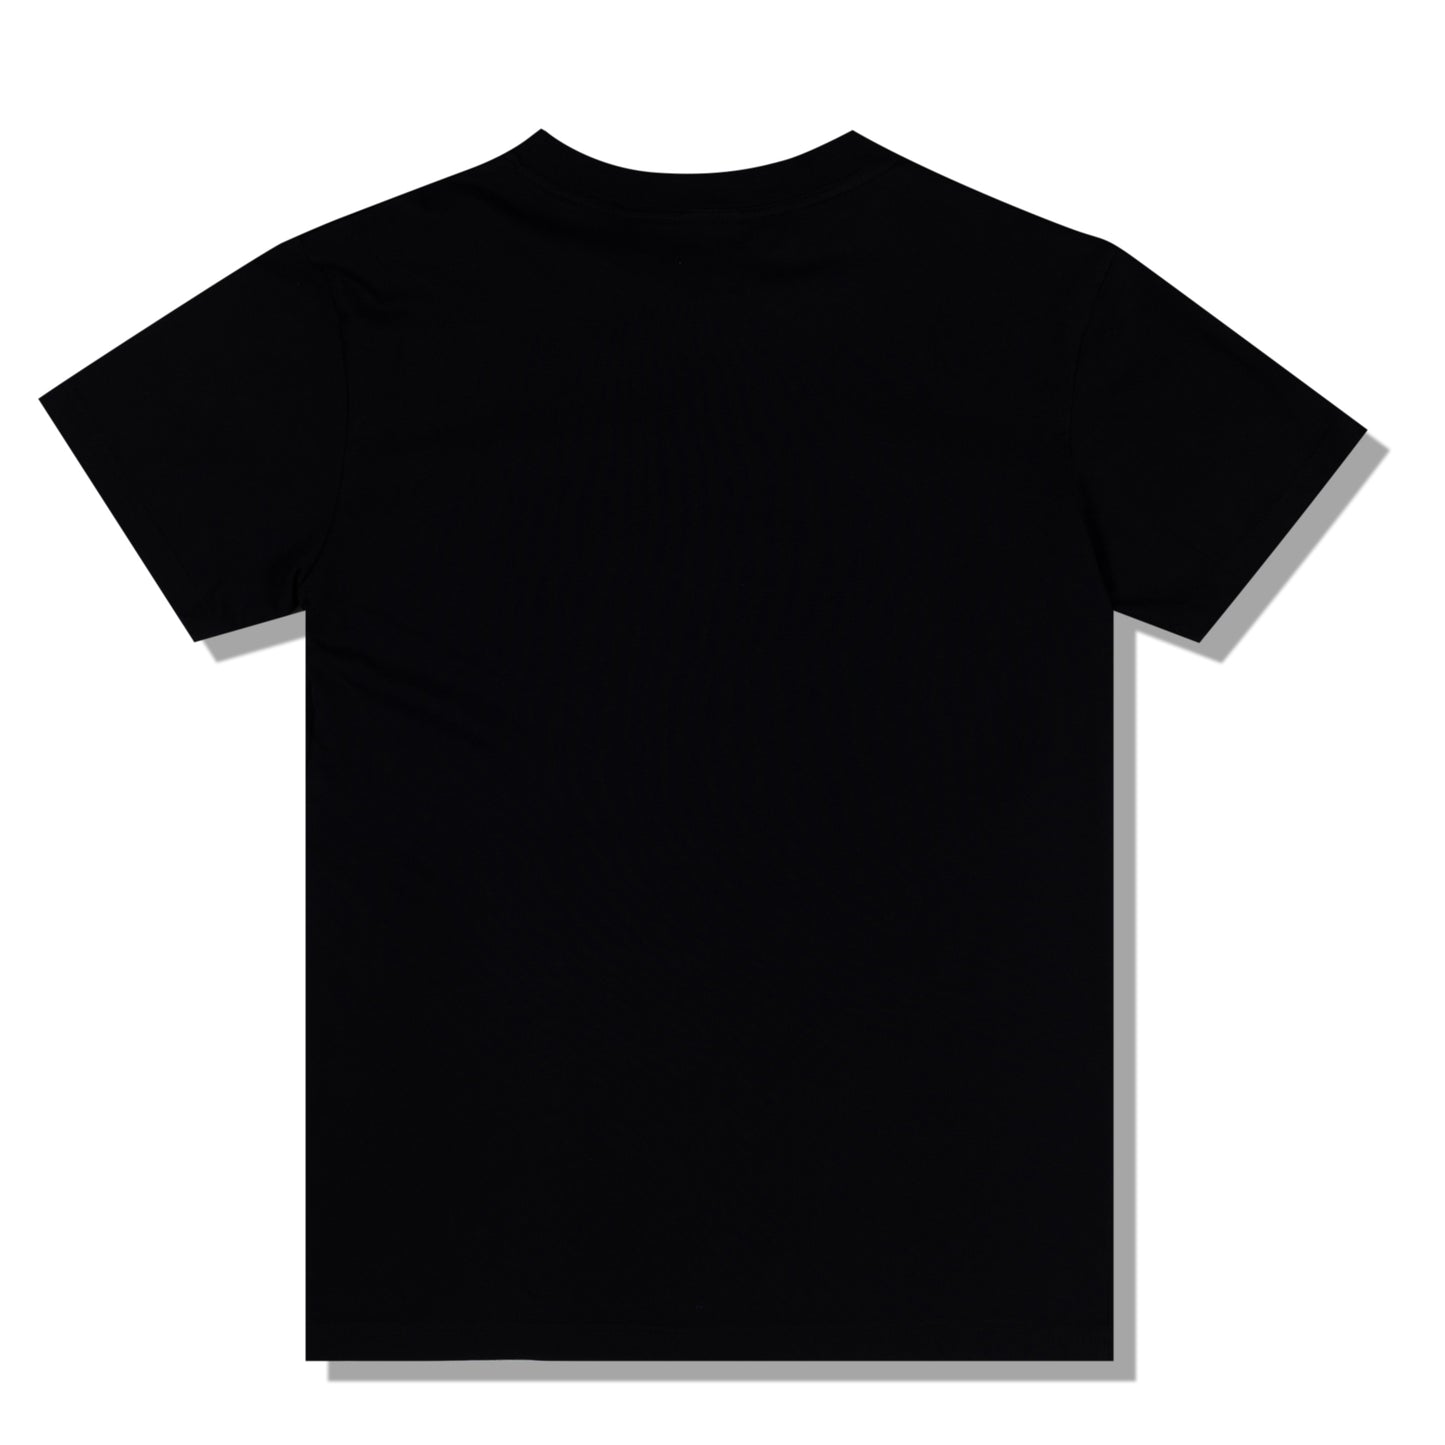 Empire State T-Shirt Black